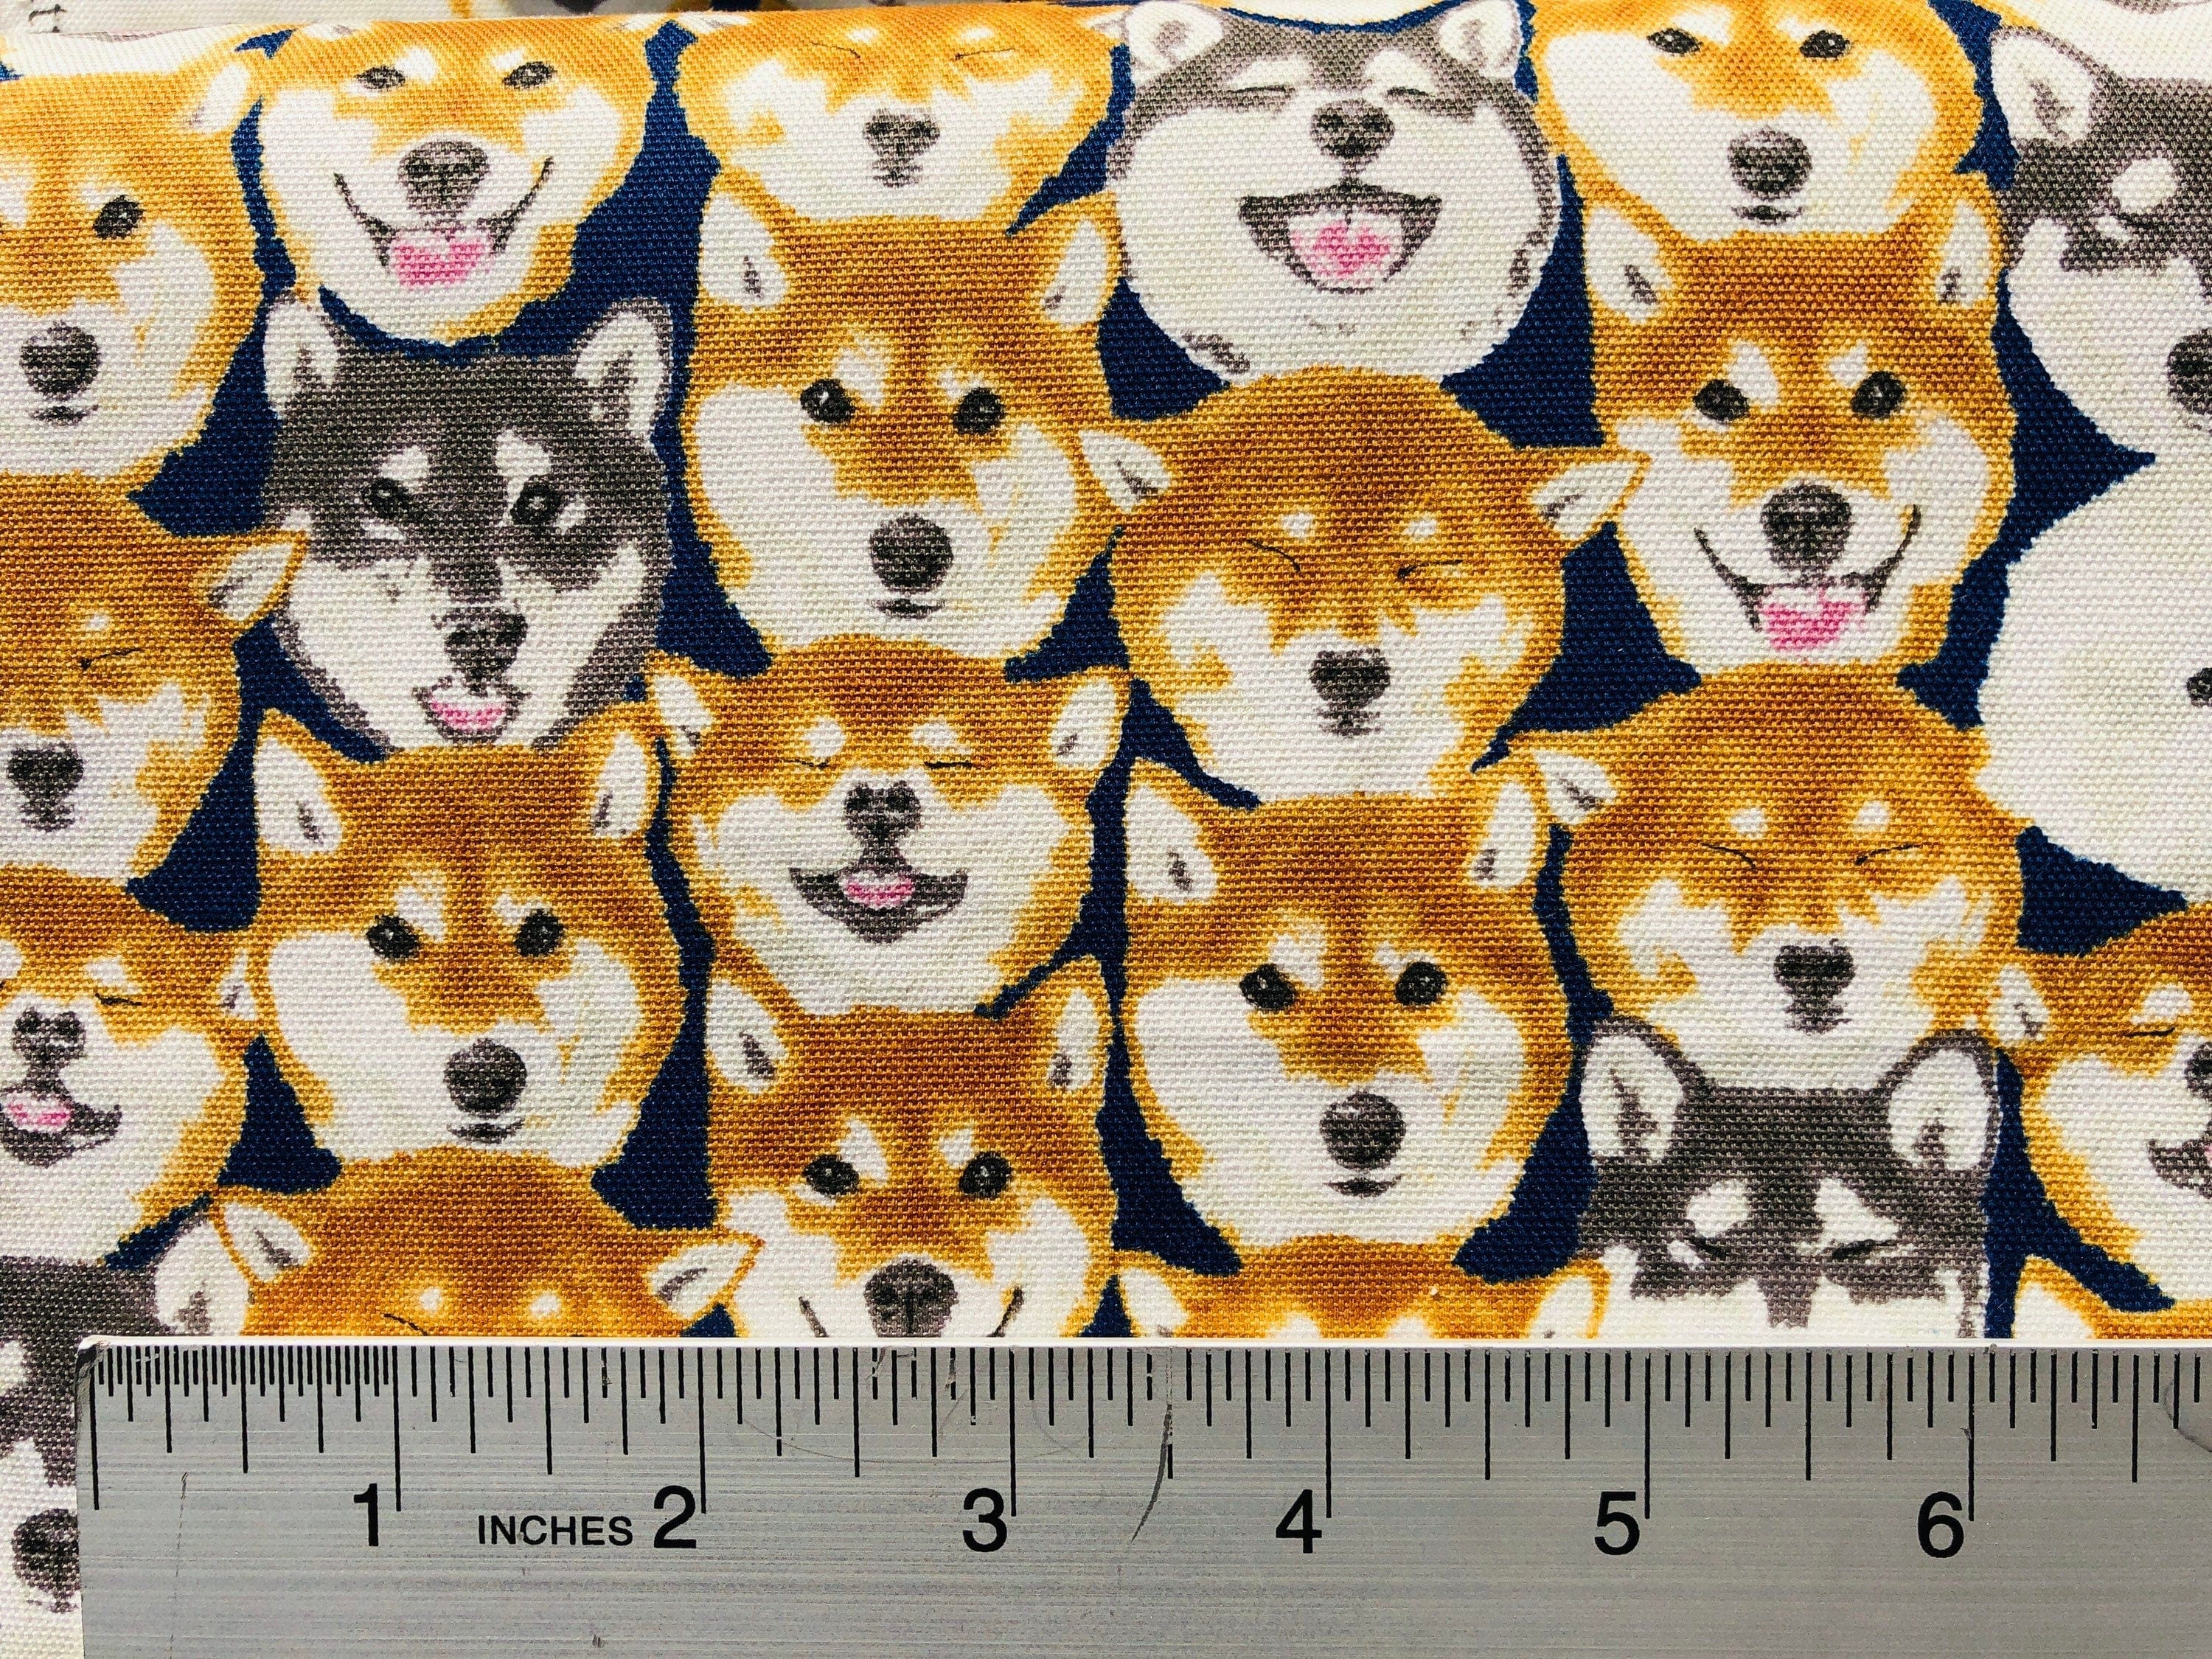 Dog - Husky - Husky Dog - Japanese Fabric - Kokka - Mask Fabric - Quilting Cotton Fabric - Black - Brown - White - YK-76070